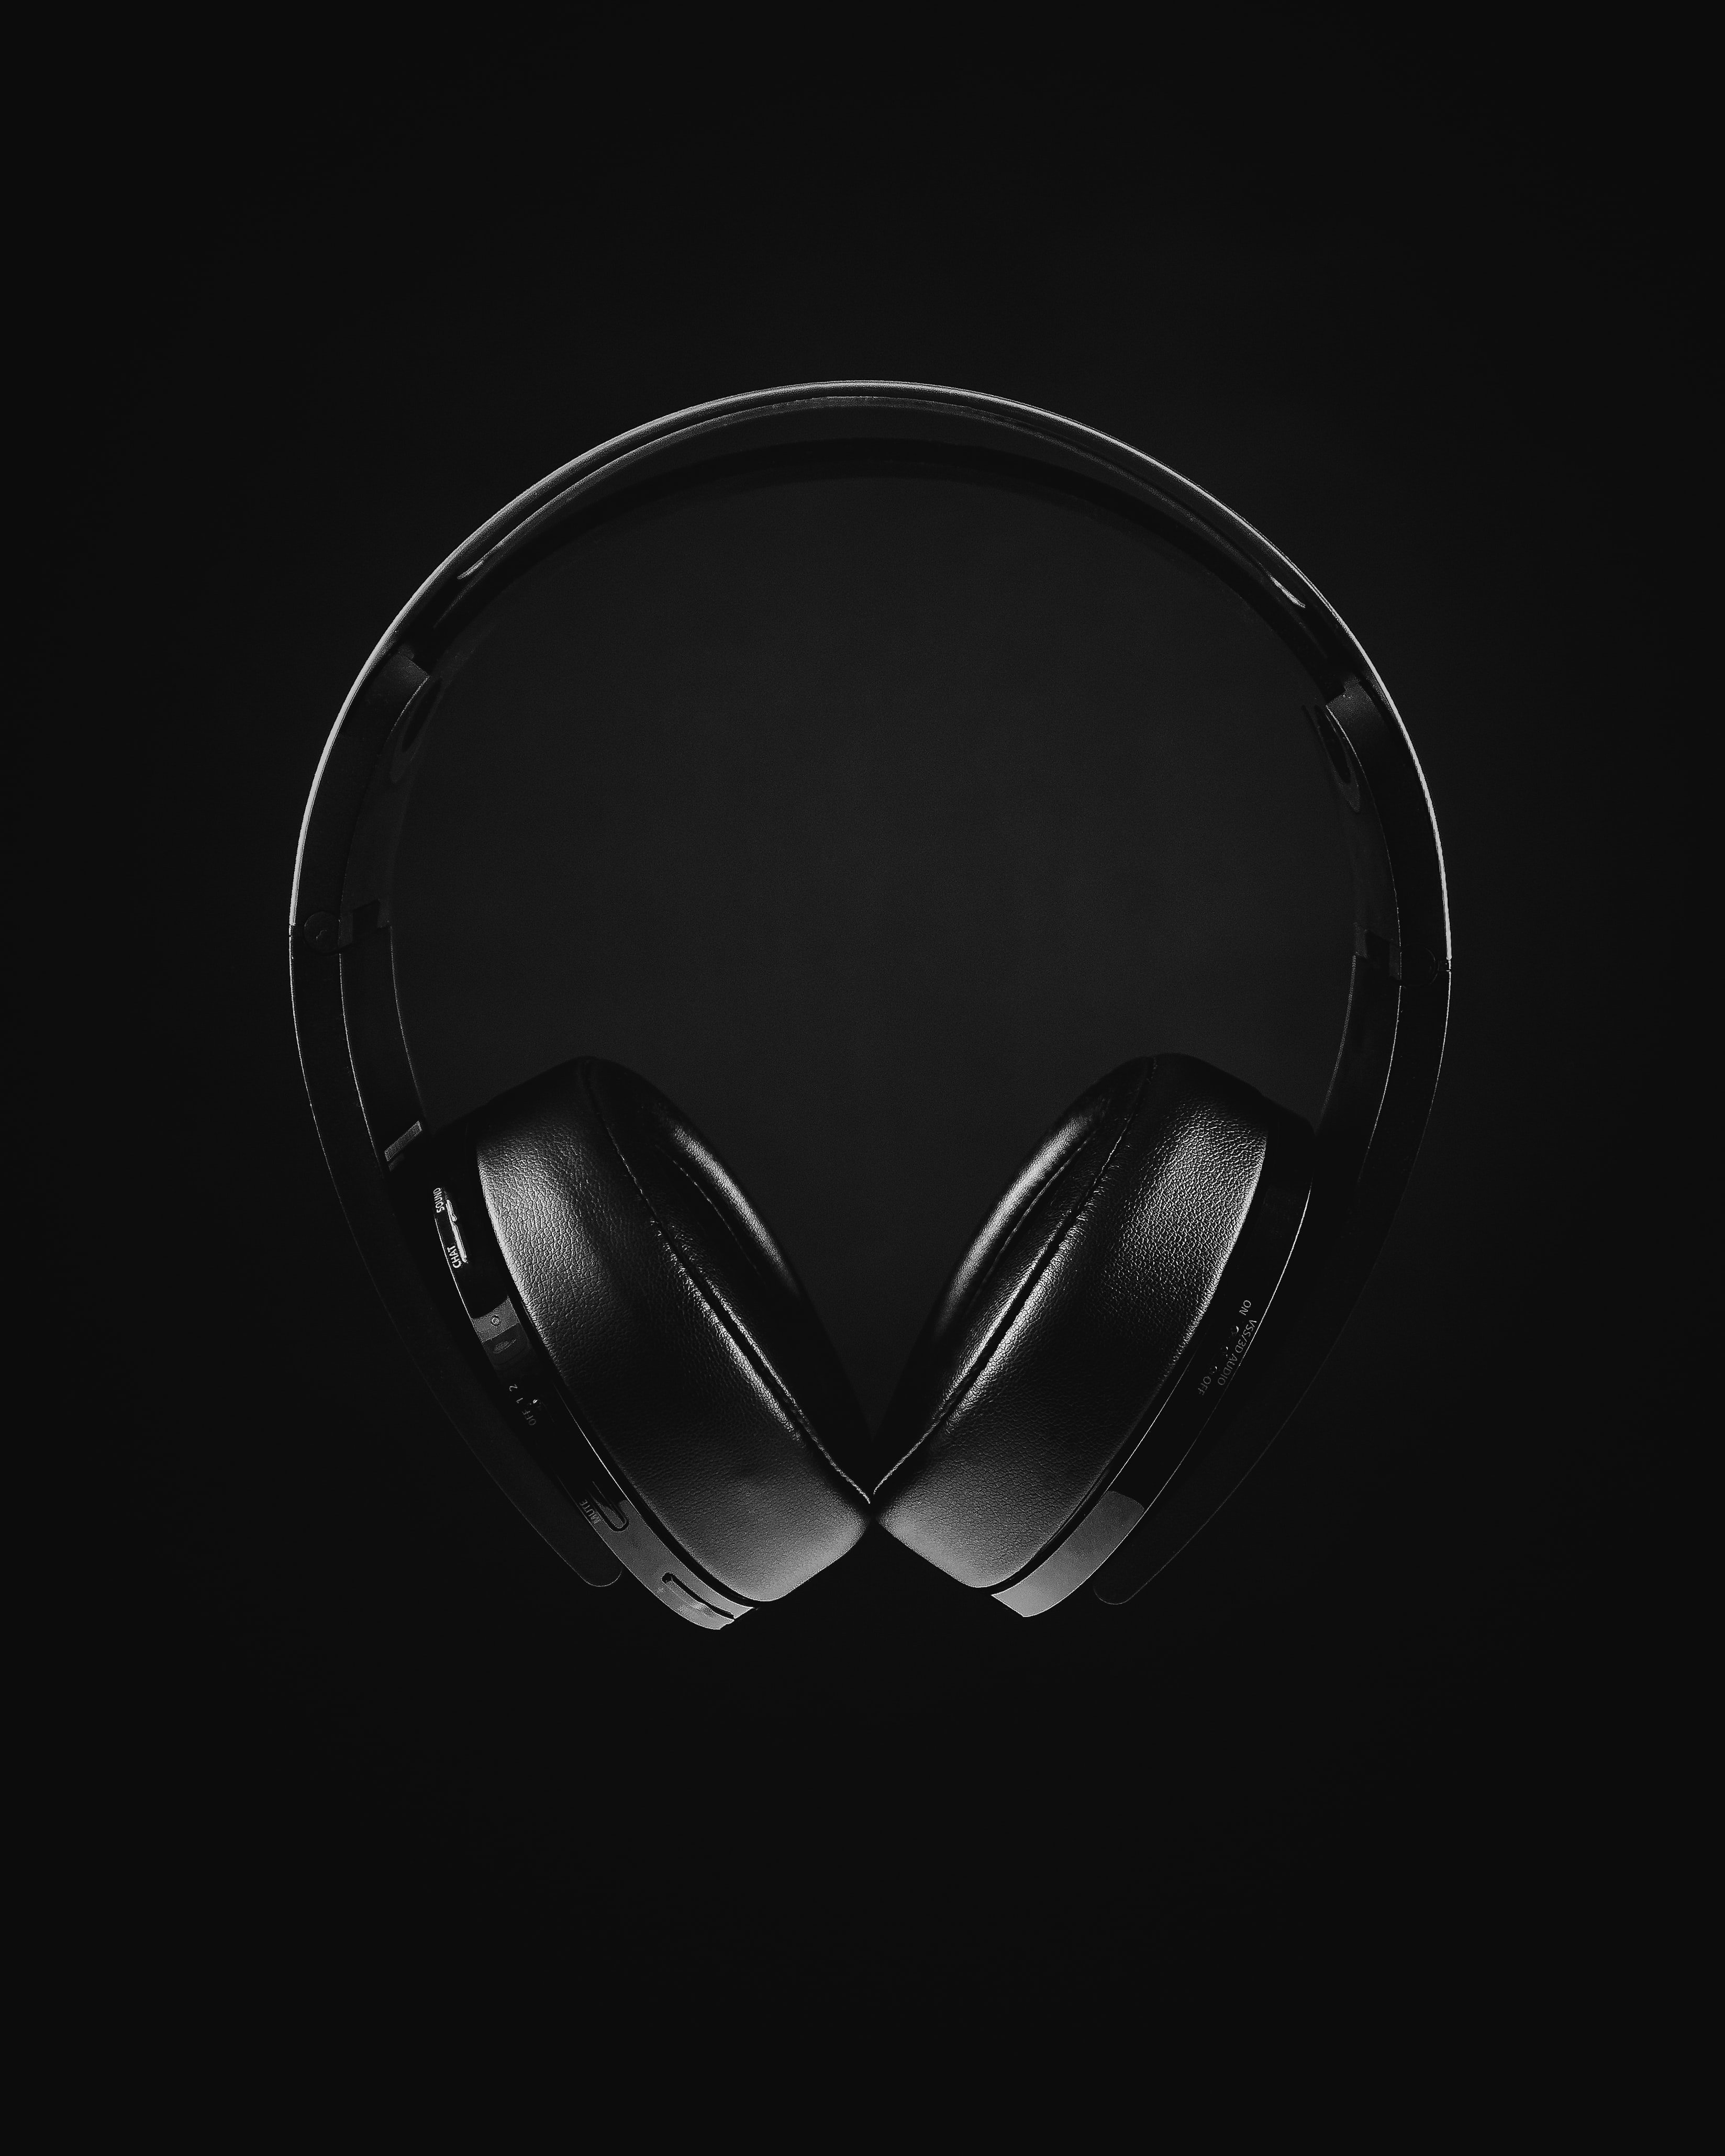 68484 download wallpaper headphones, black, technics, technique screensavers and pictures for free